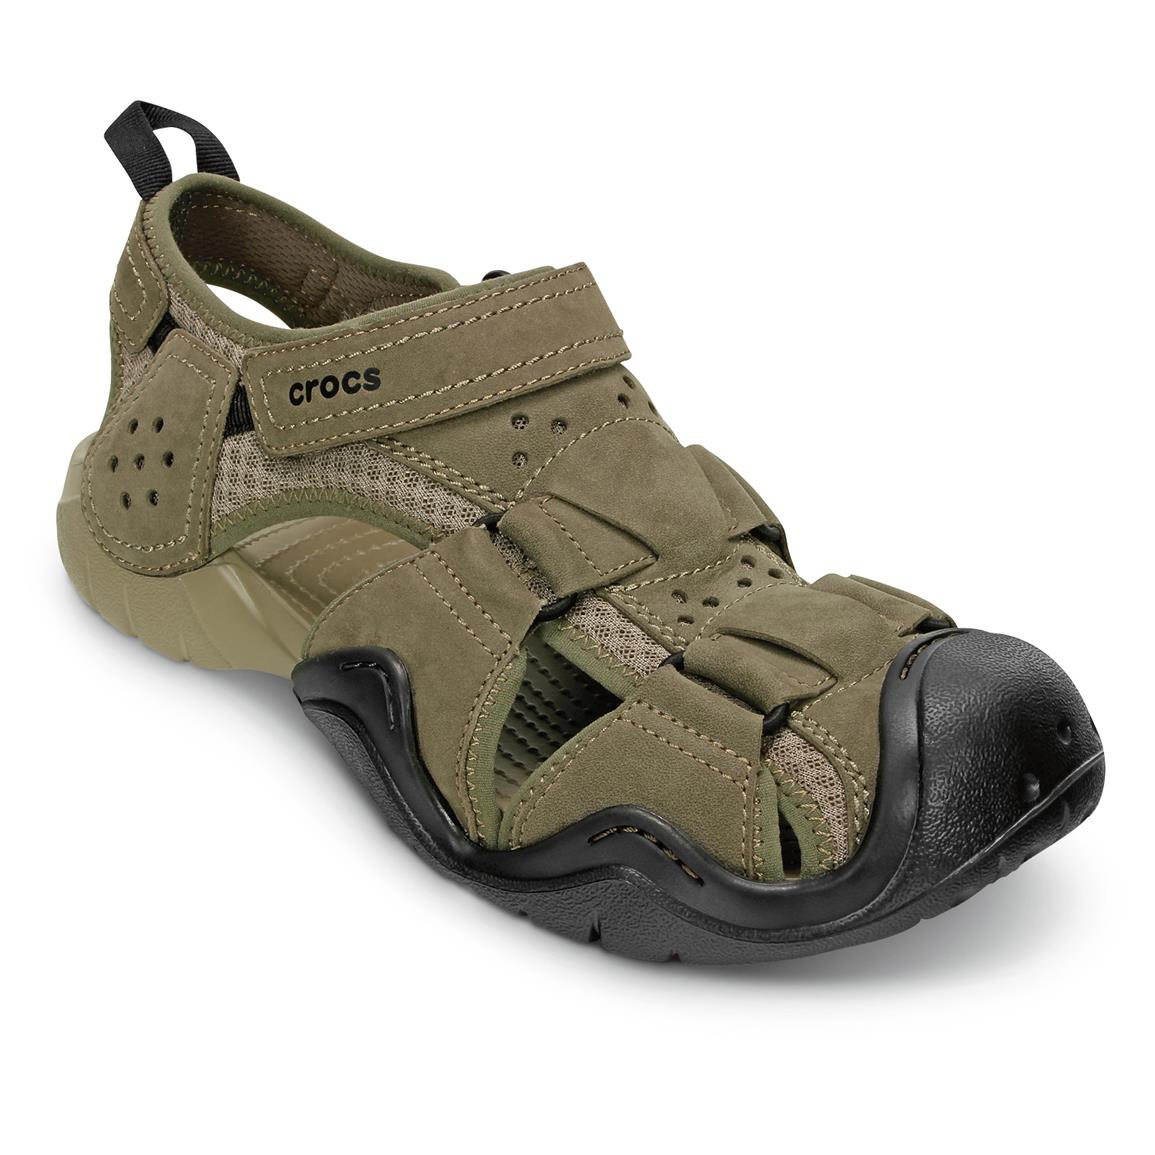 Crocs Men's Swiftwater Leather Fisherman Sandals - 654244, Sandals ...